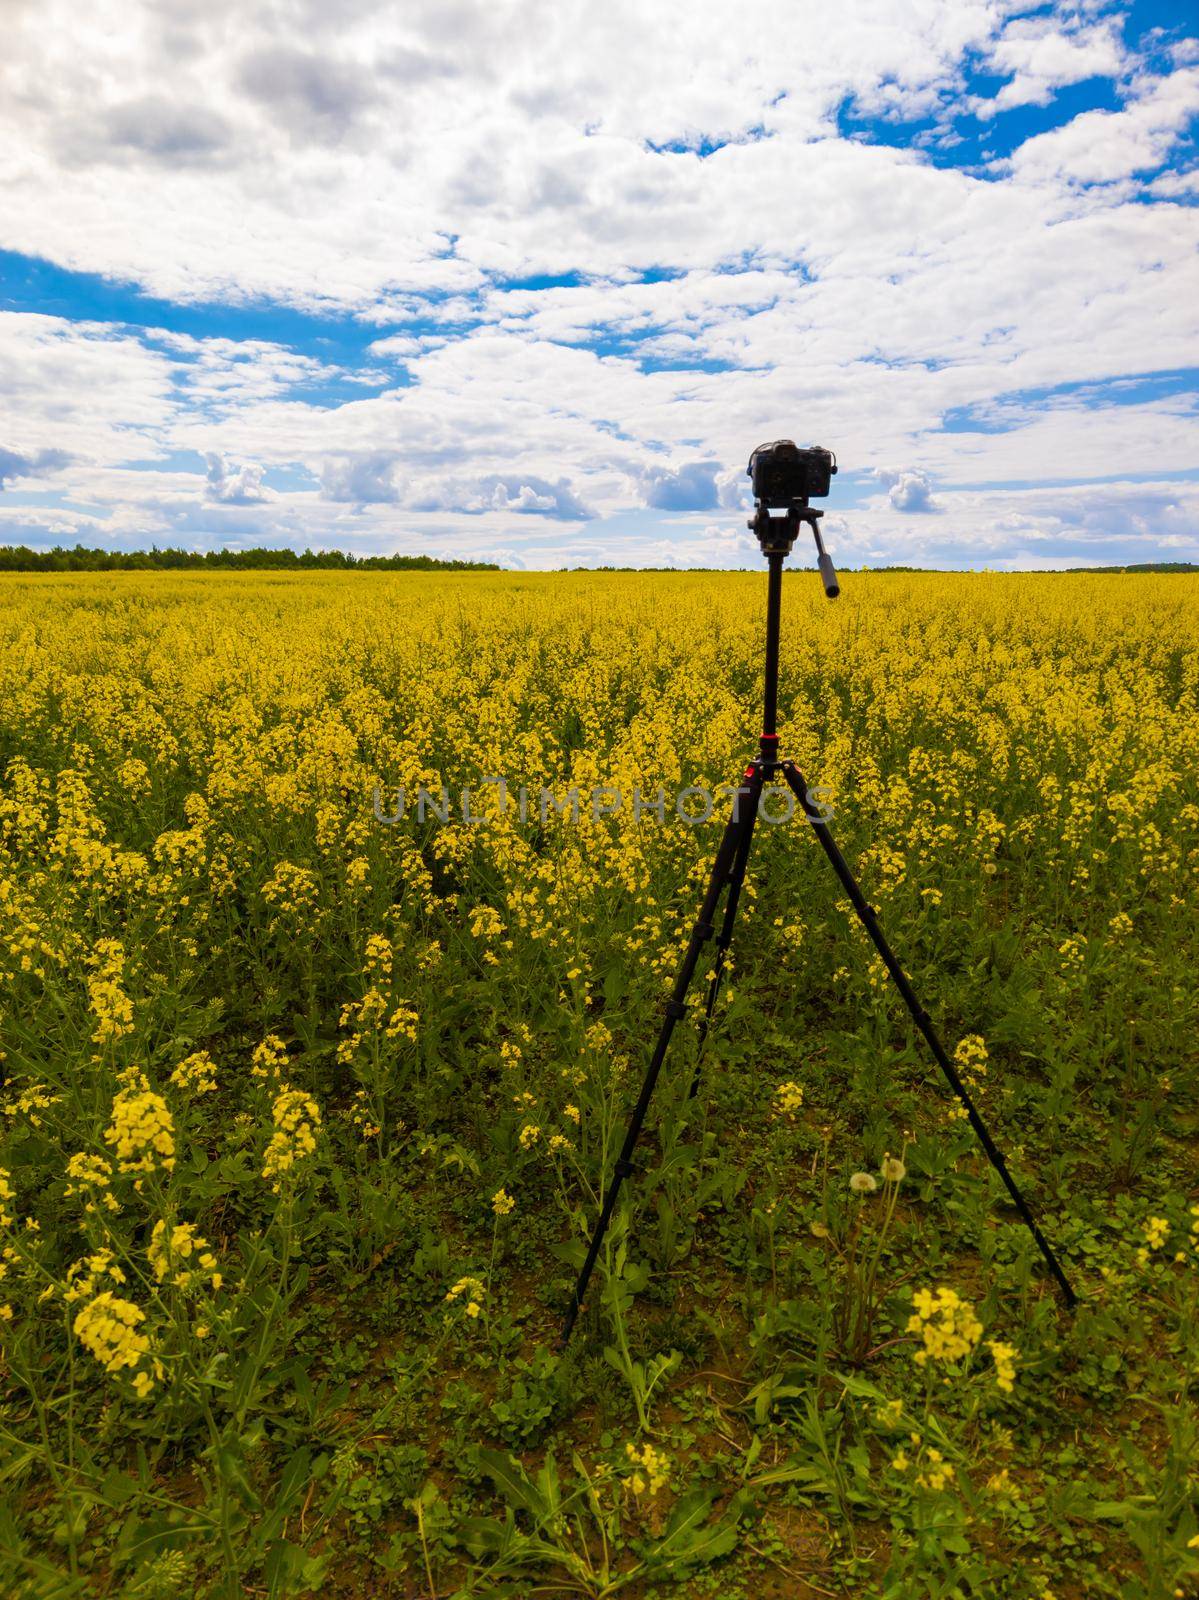 modern professional mirrorless camera on tripod shooting yellow field on tripod, closeup by z1b